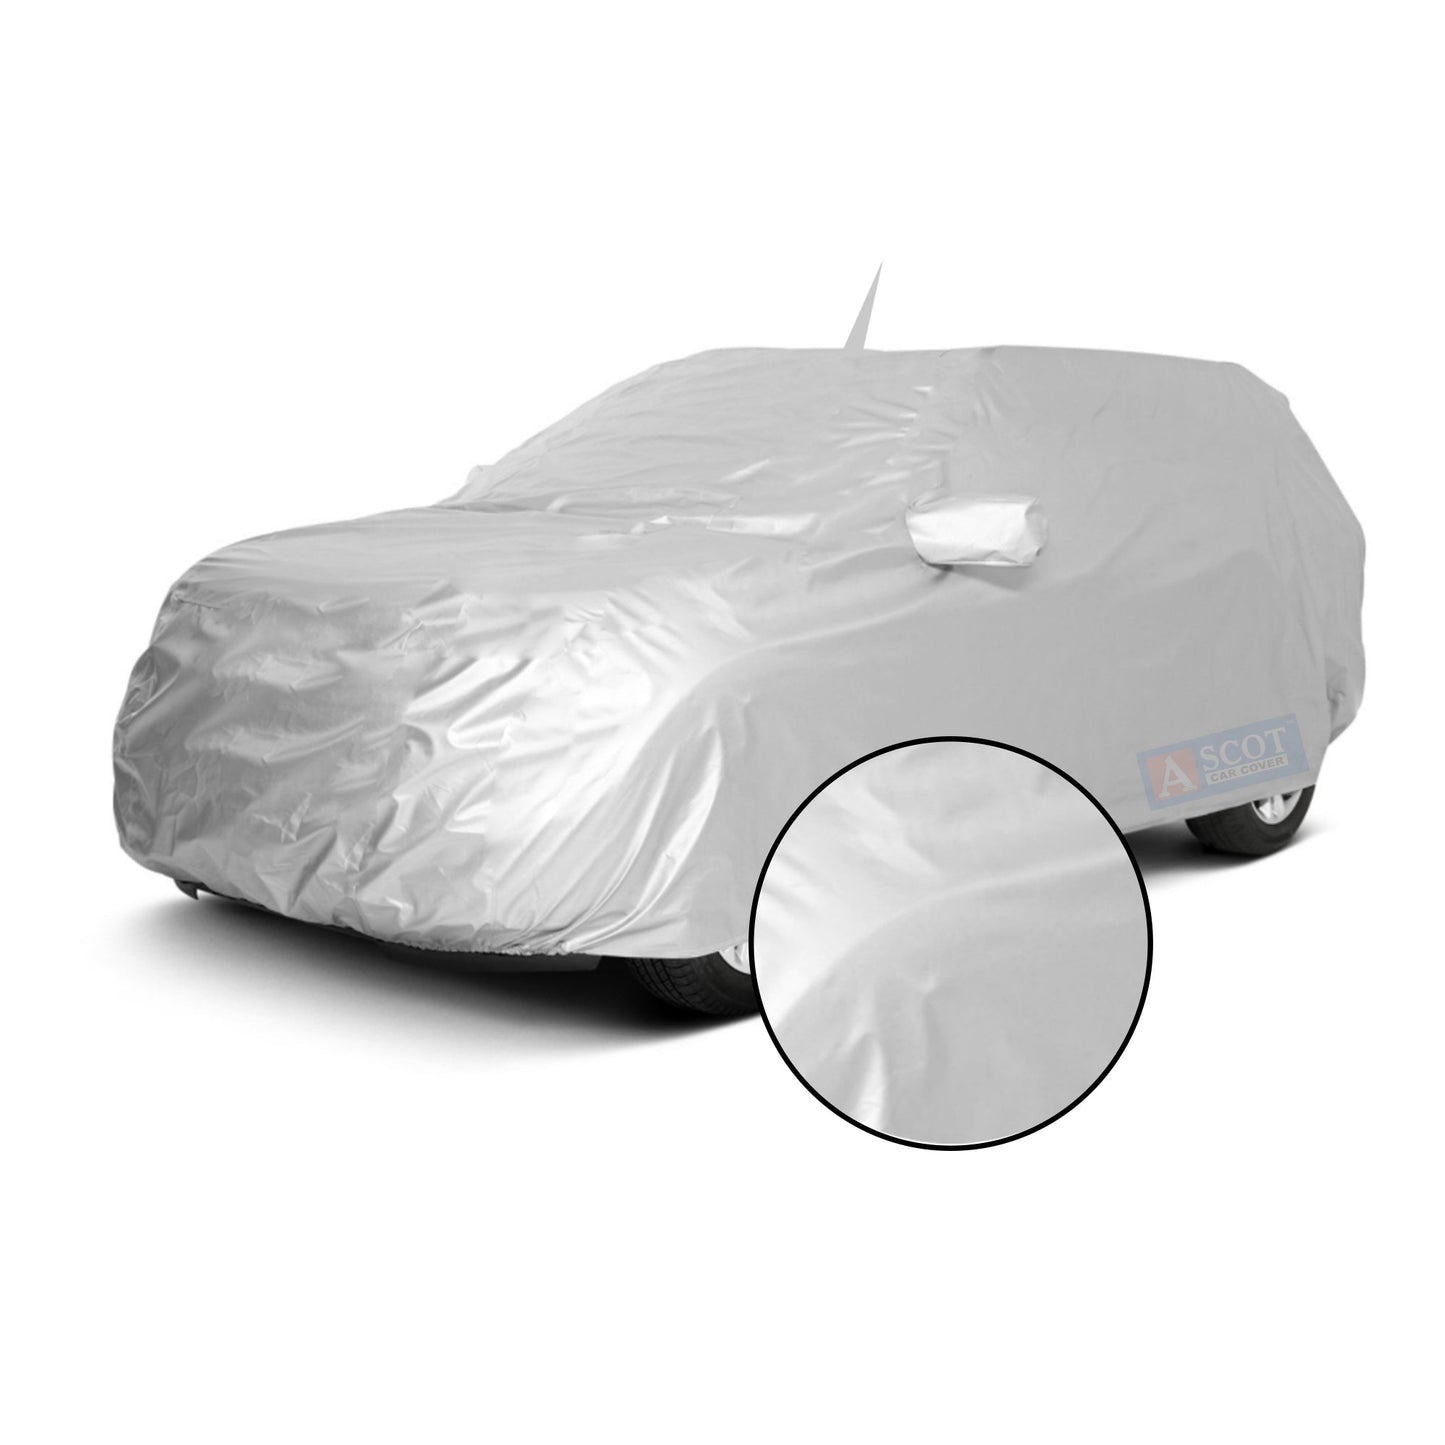 Ascot Maruti Suzuki Wagonr 2010-2019 Model Car Body Cover Dust Proof, Trippel Stitched